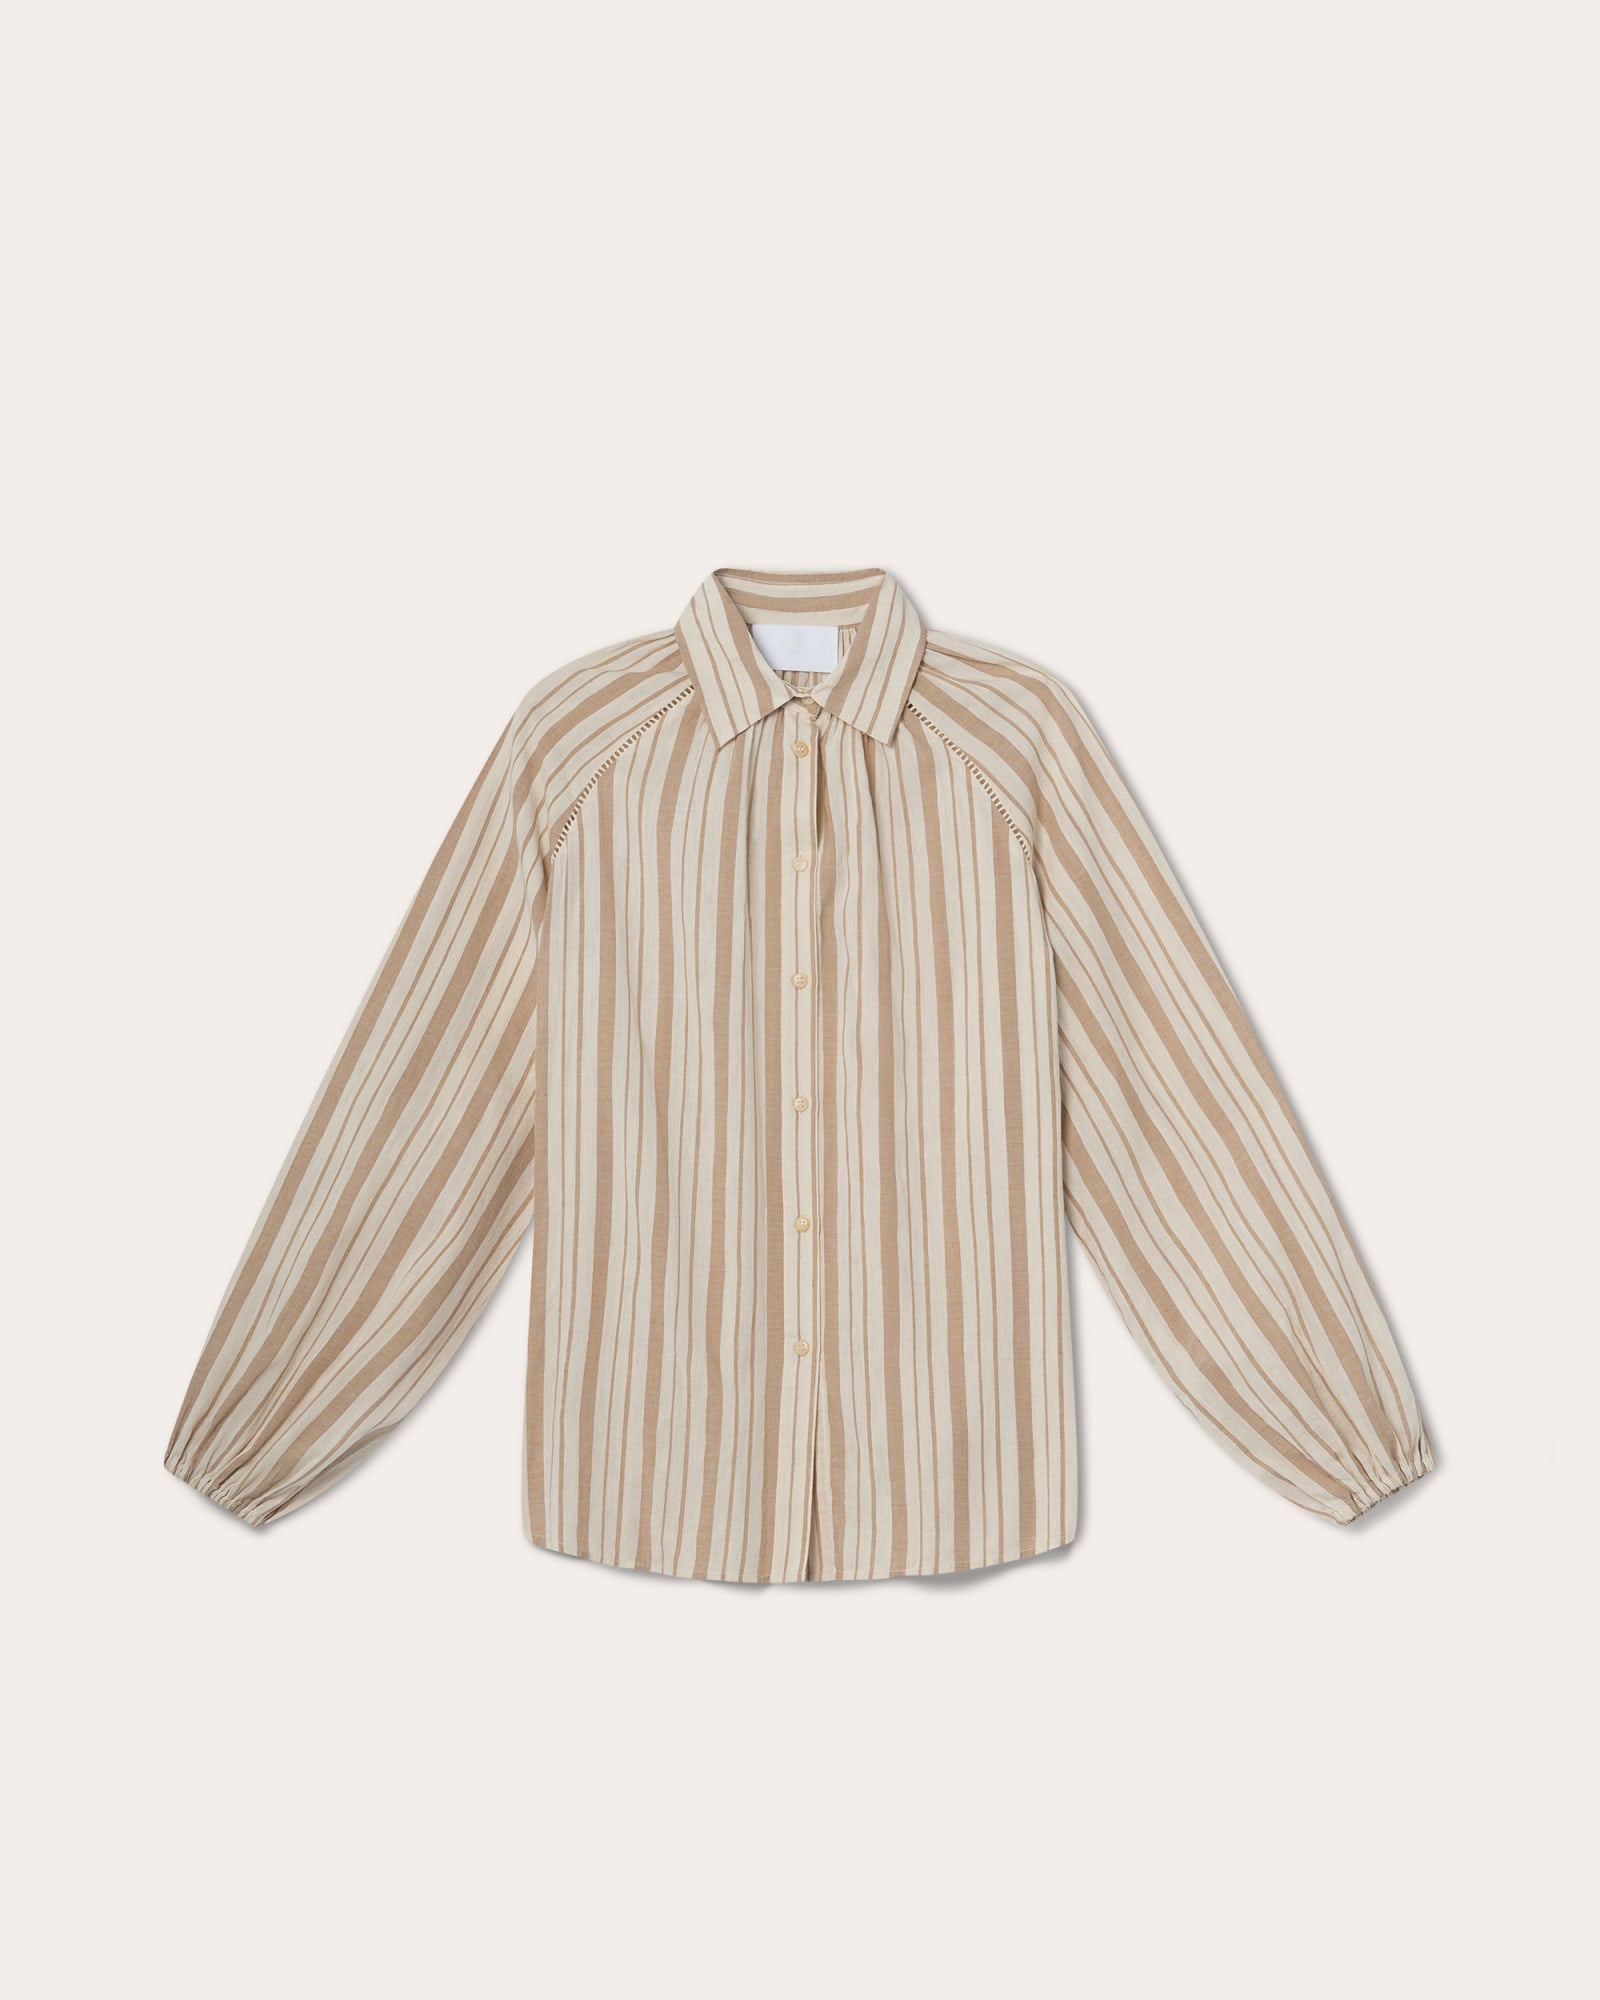 Tiana Top | Driftwood Yarn Dyed Stripe